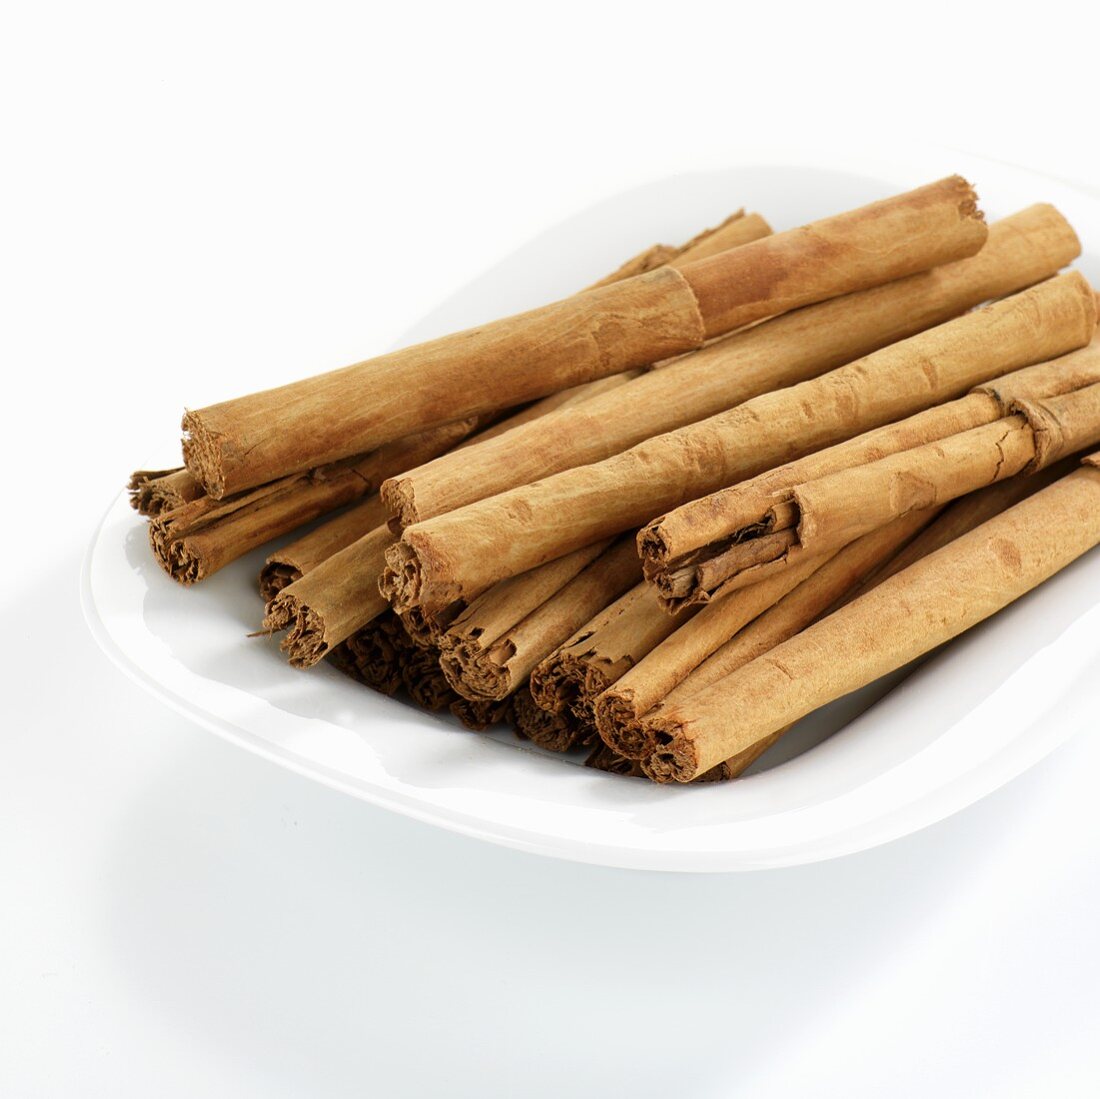 Several cinnamon sticks